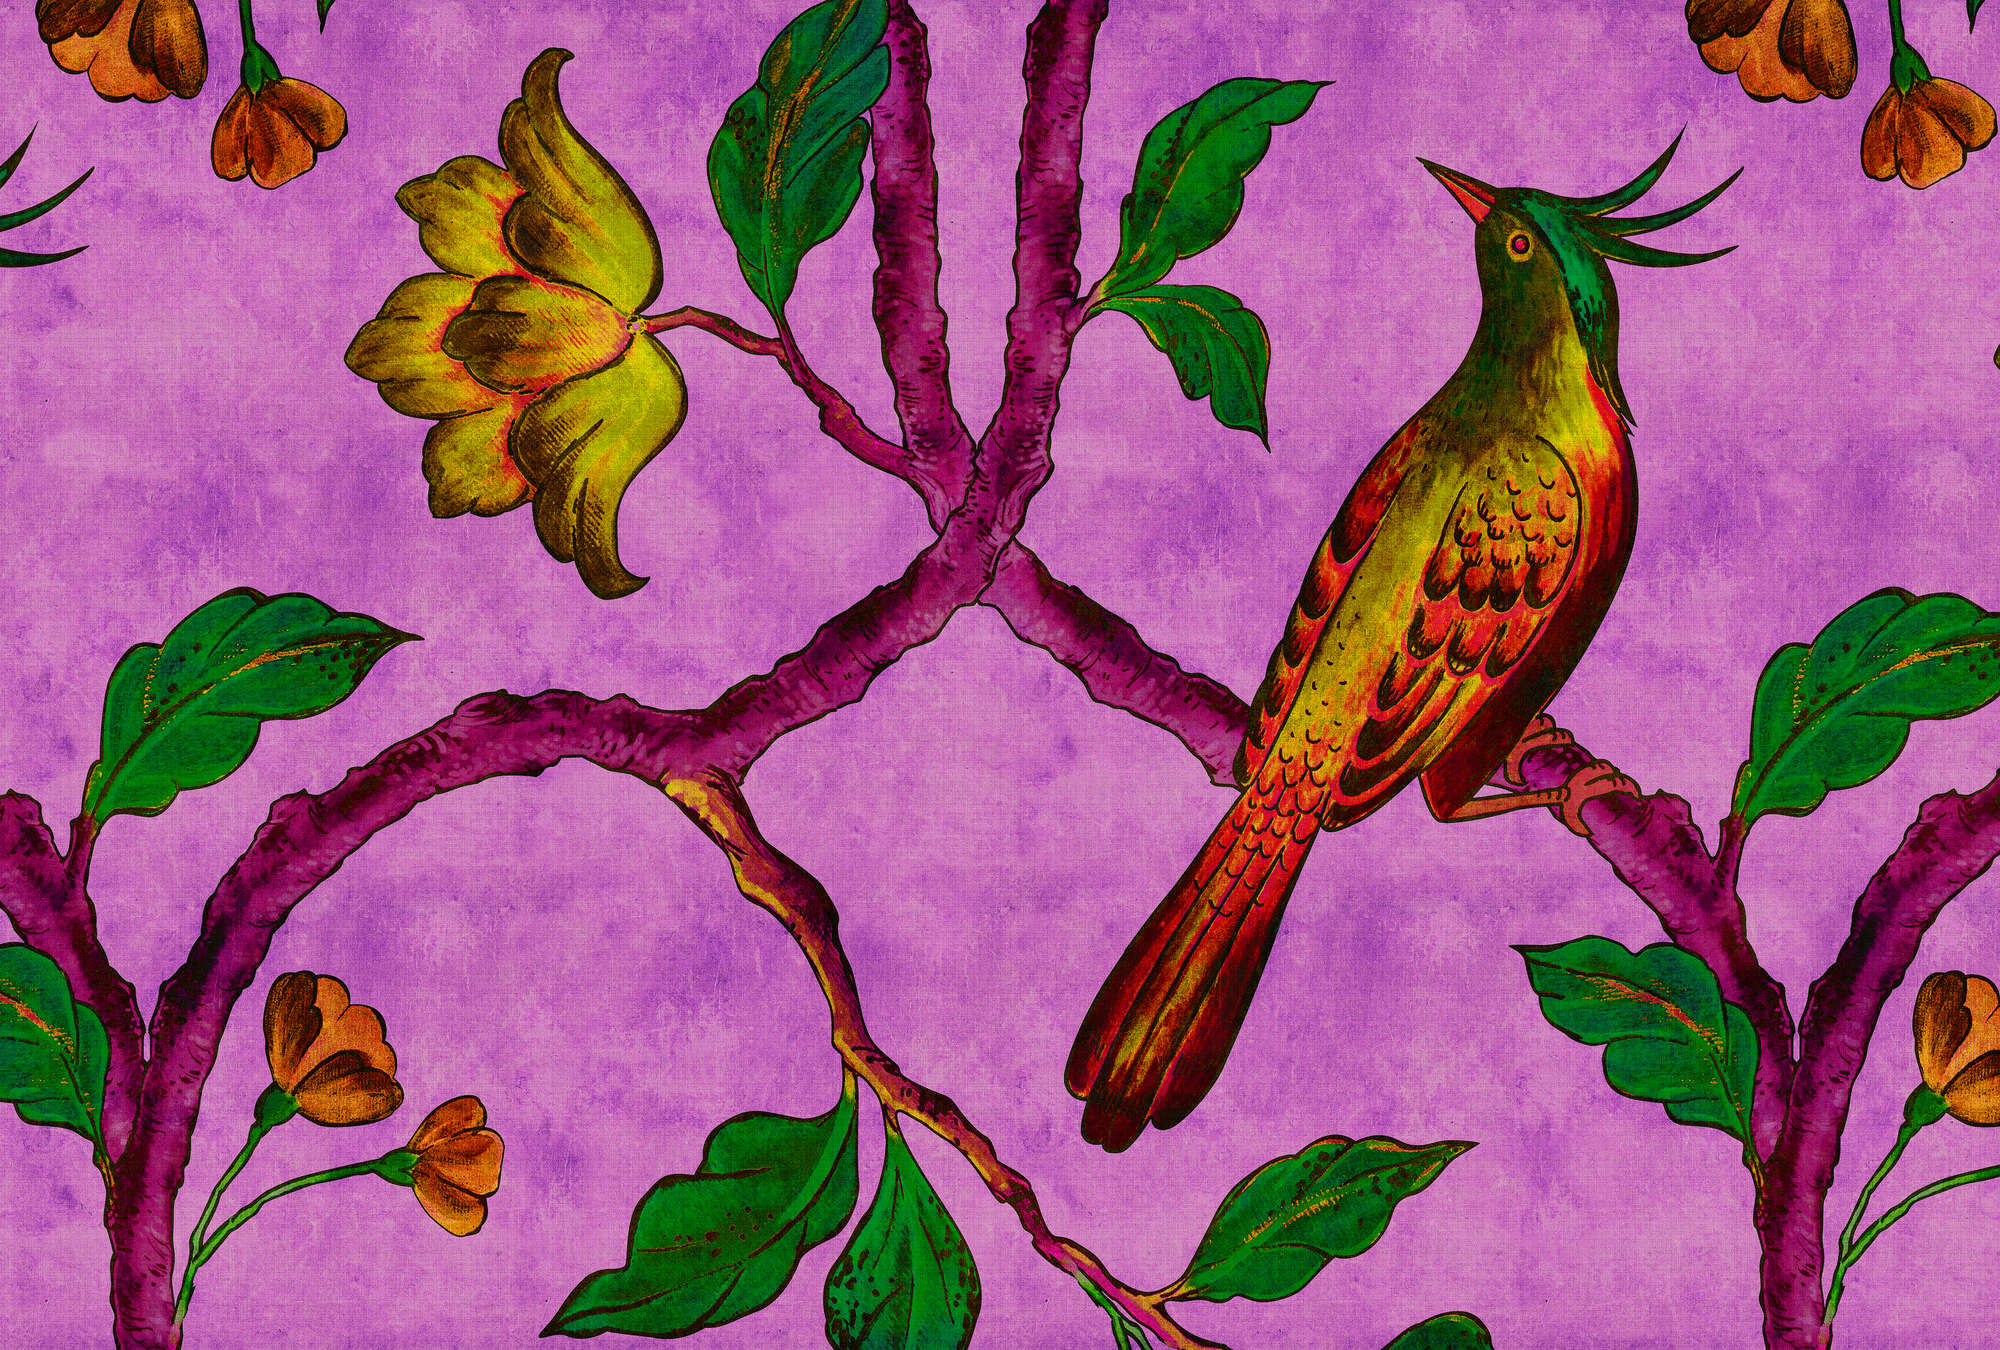             Bird Of Paradis 2 - papel pintado estampado digital ave del paraíso en estructura de lino natural - amarillo, verde | polar liso mate
        